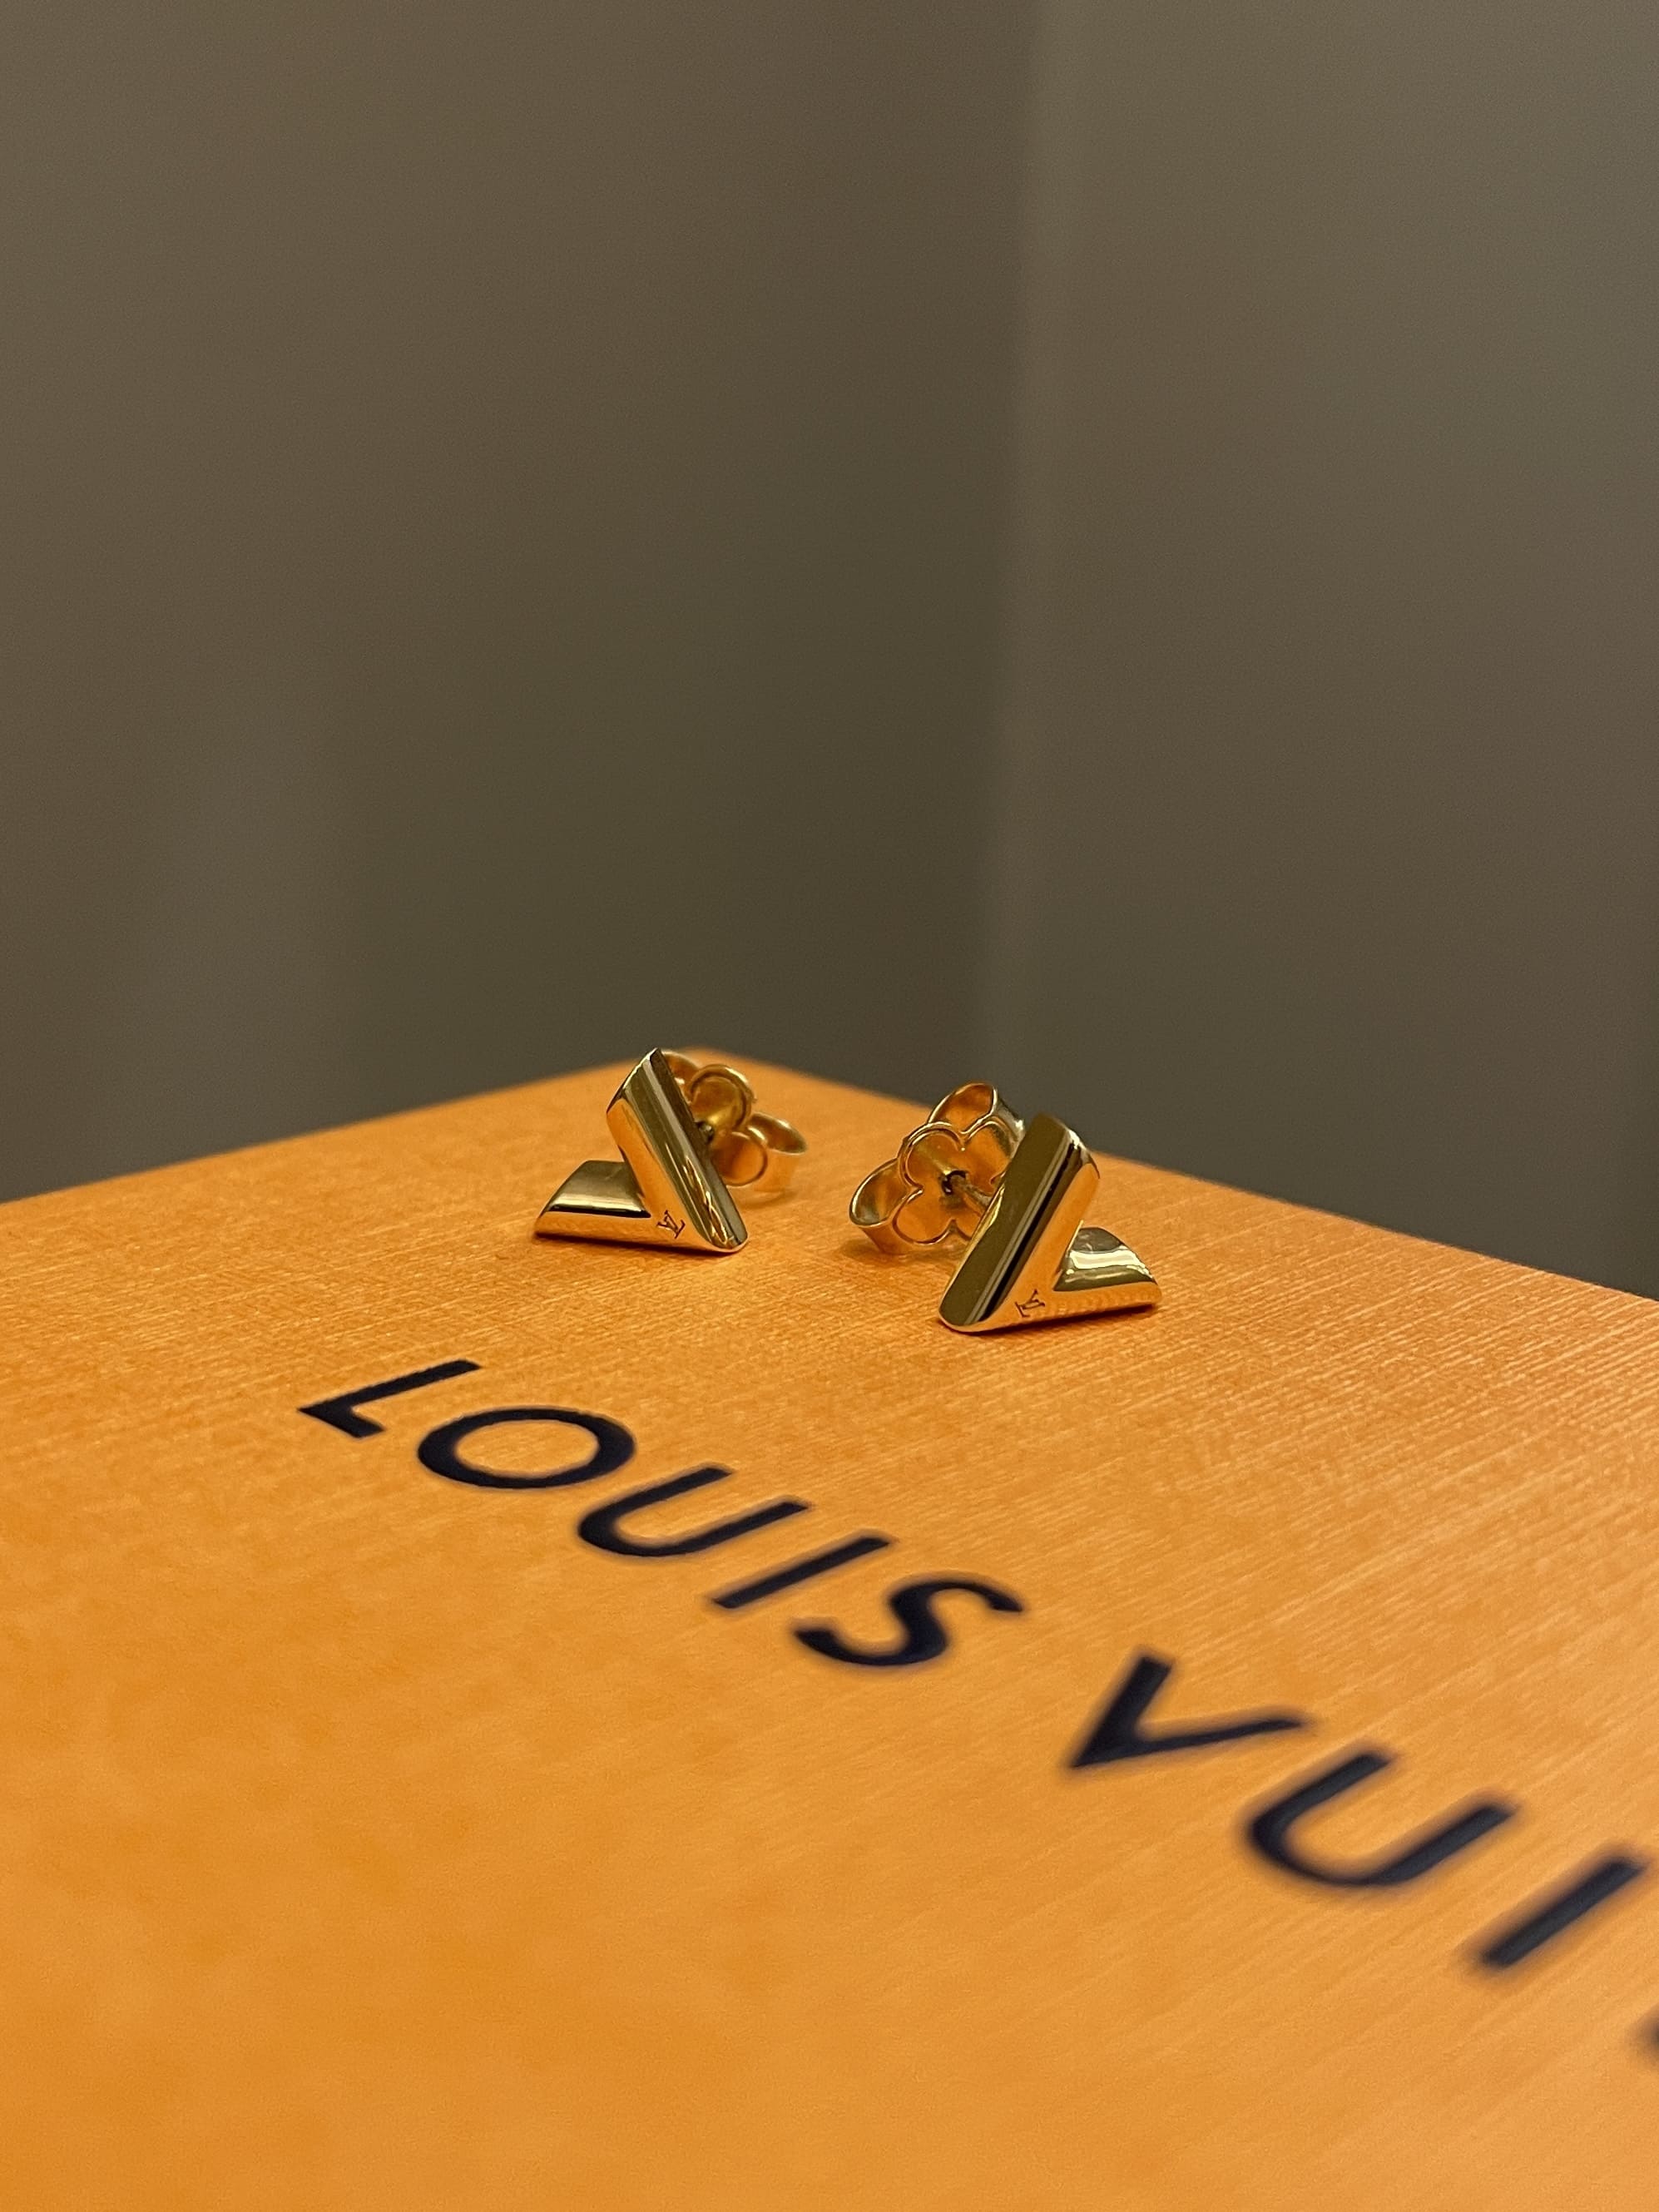 Louis Vuitton Gold Tone Essential V Stud Earrings - 2 Pieces